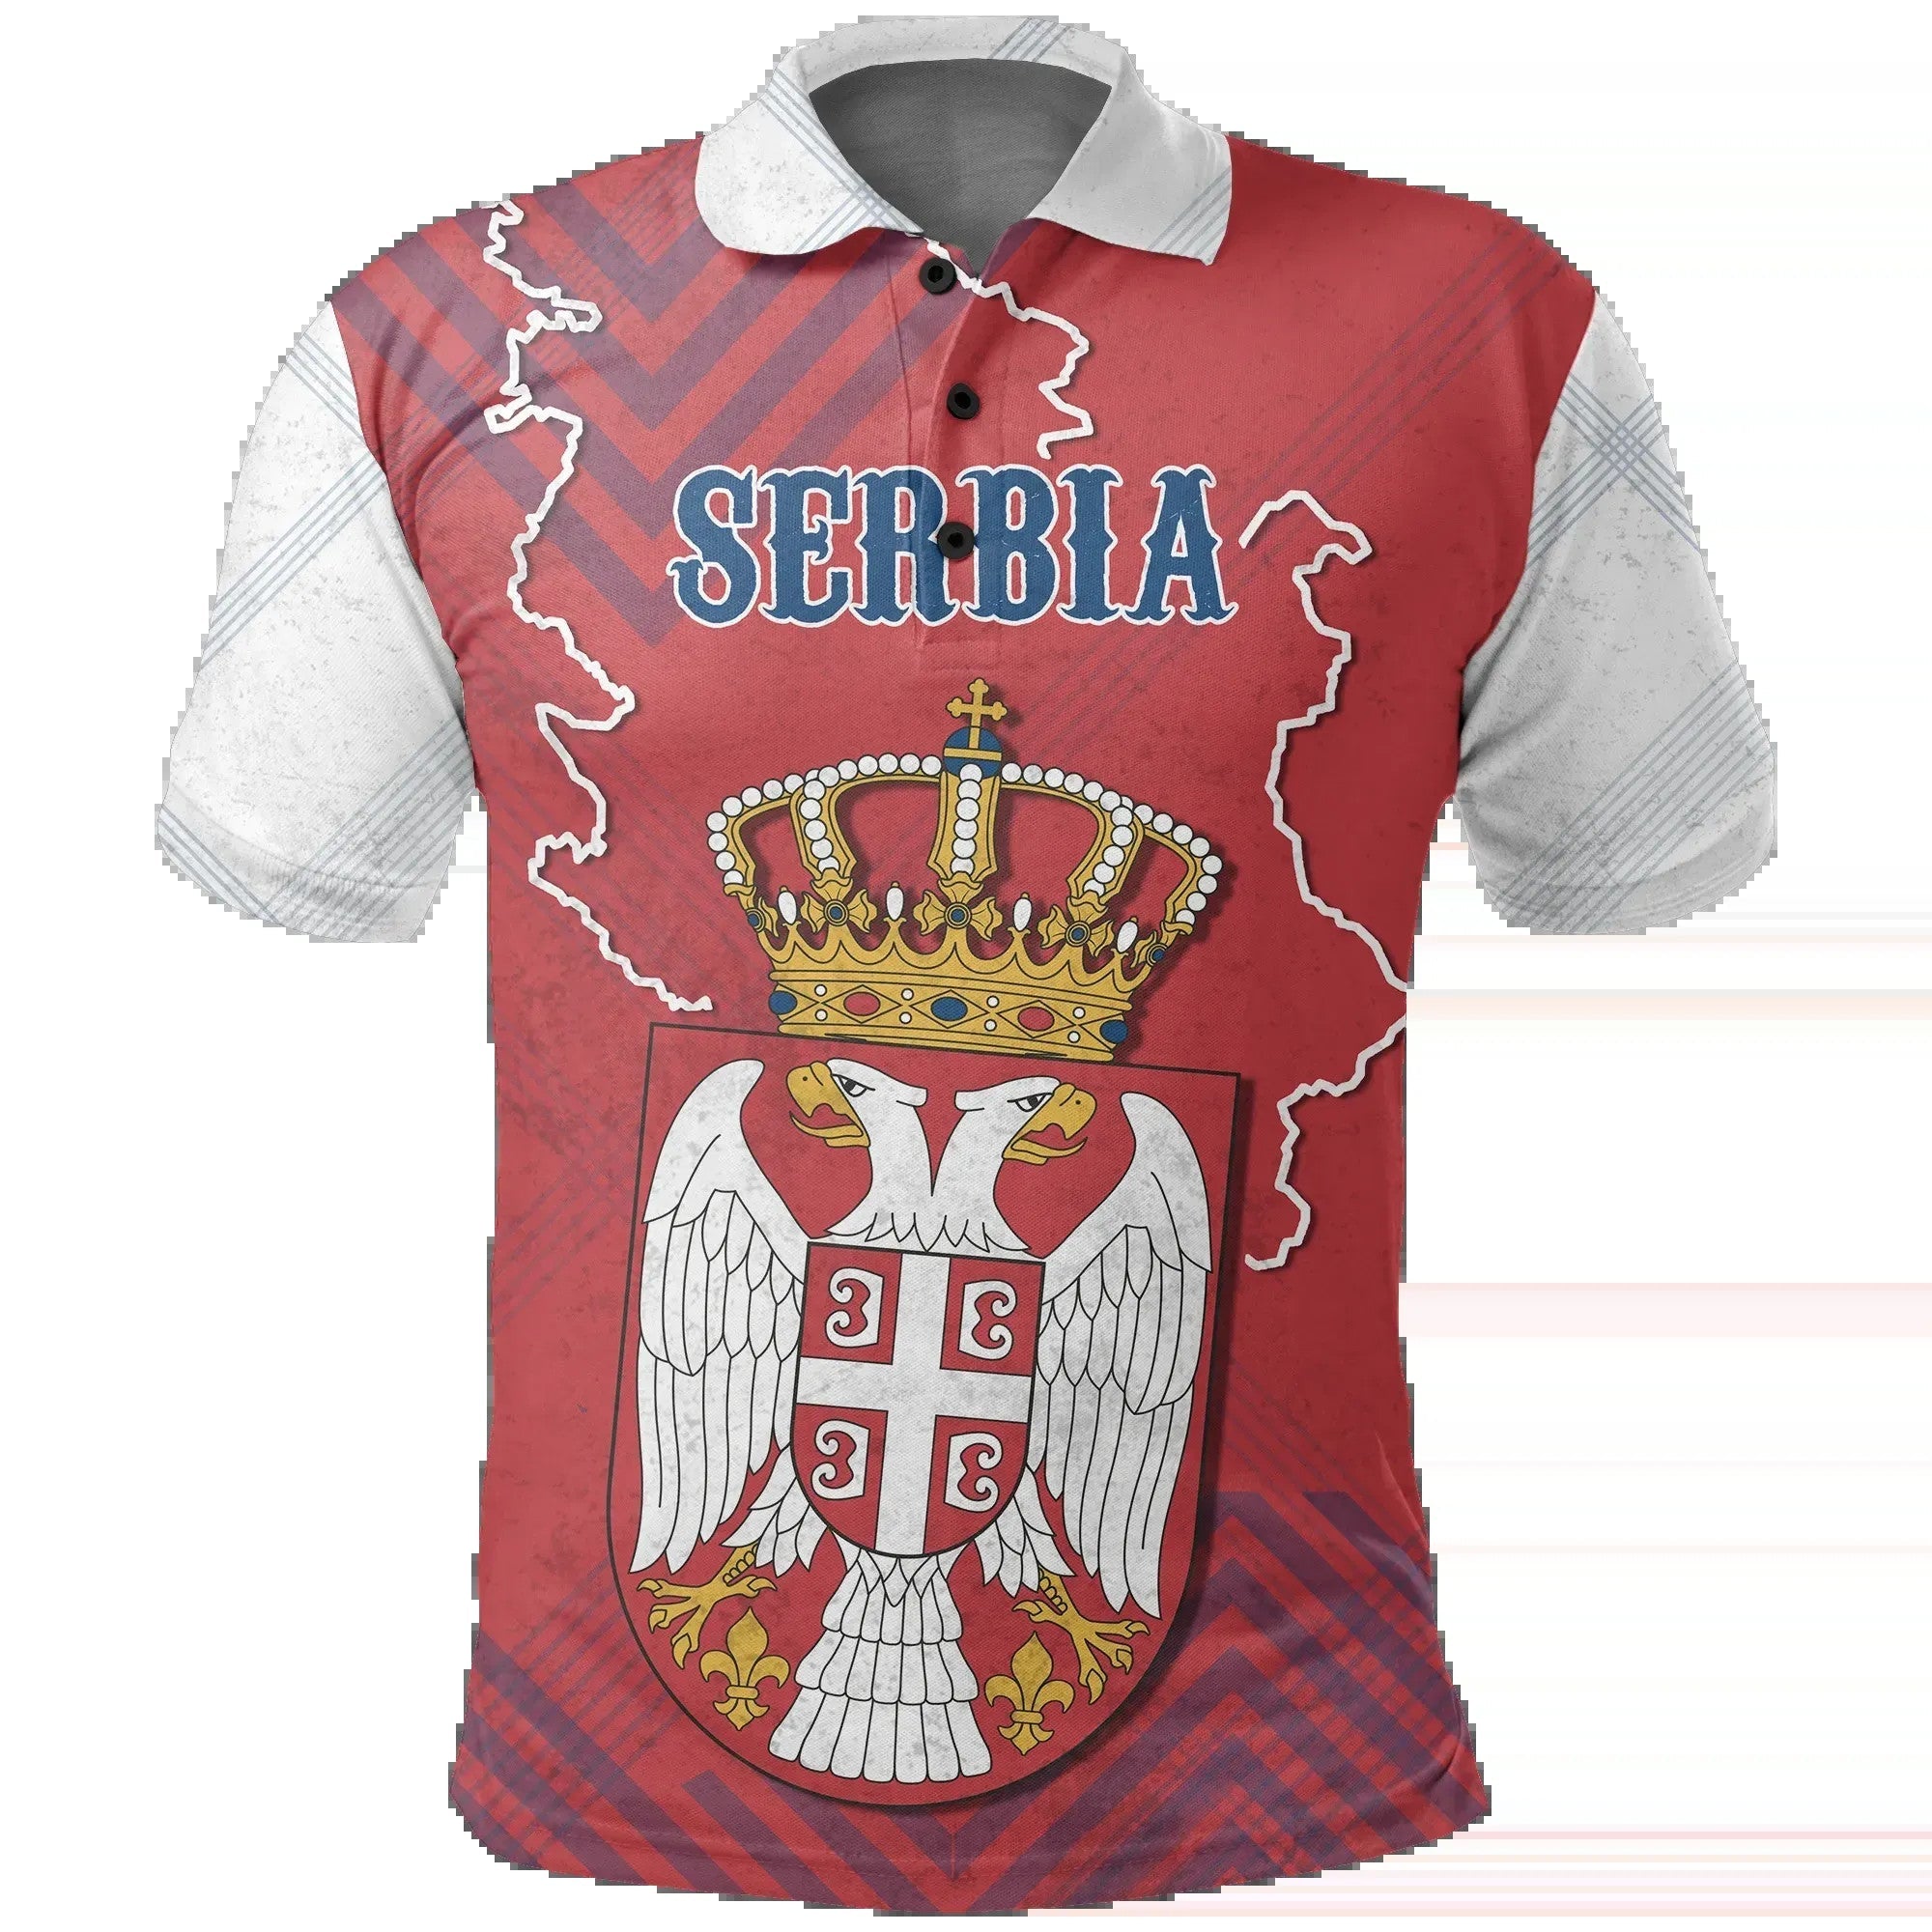 serbia-mix-polo-shirt